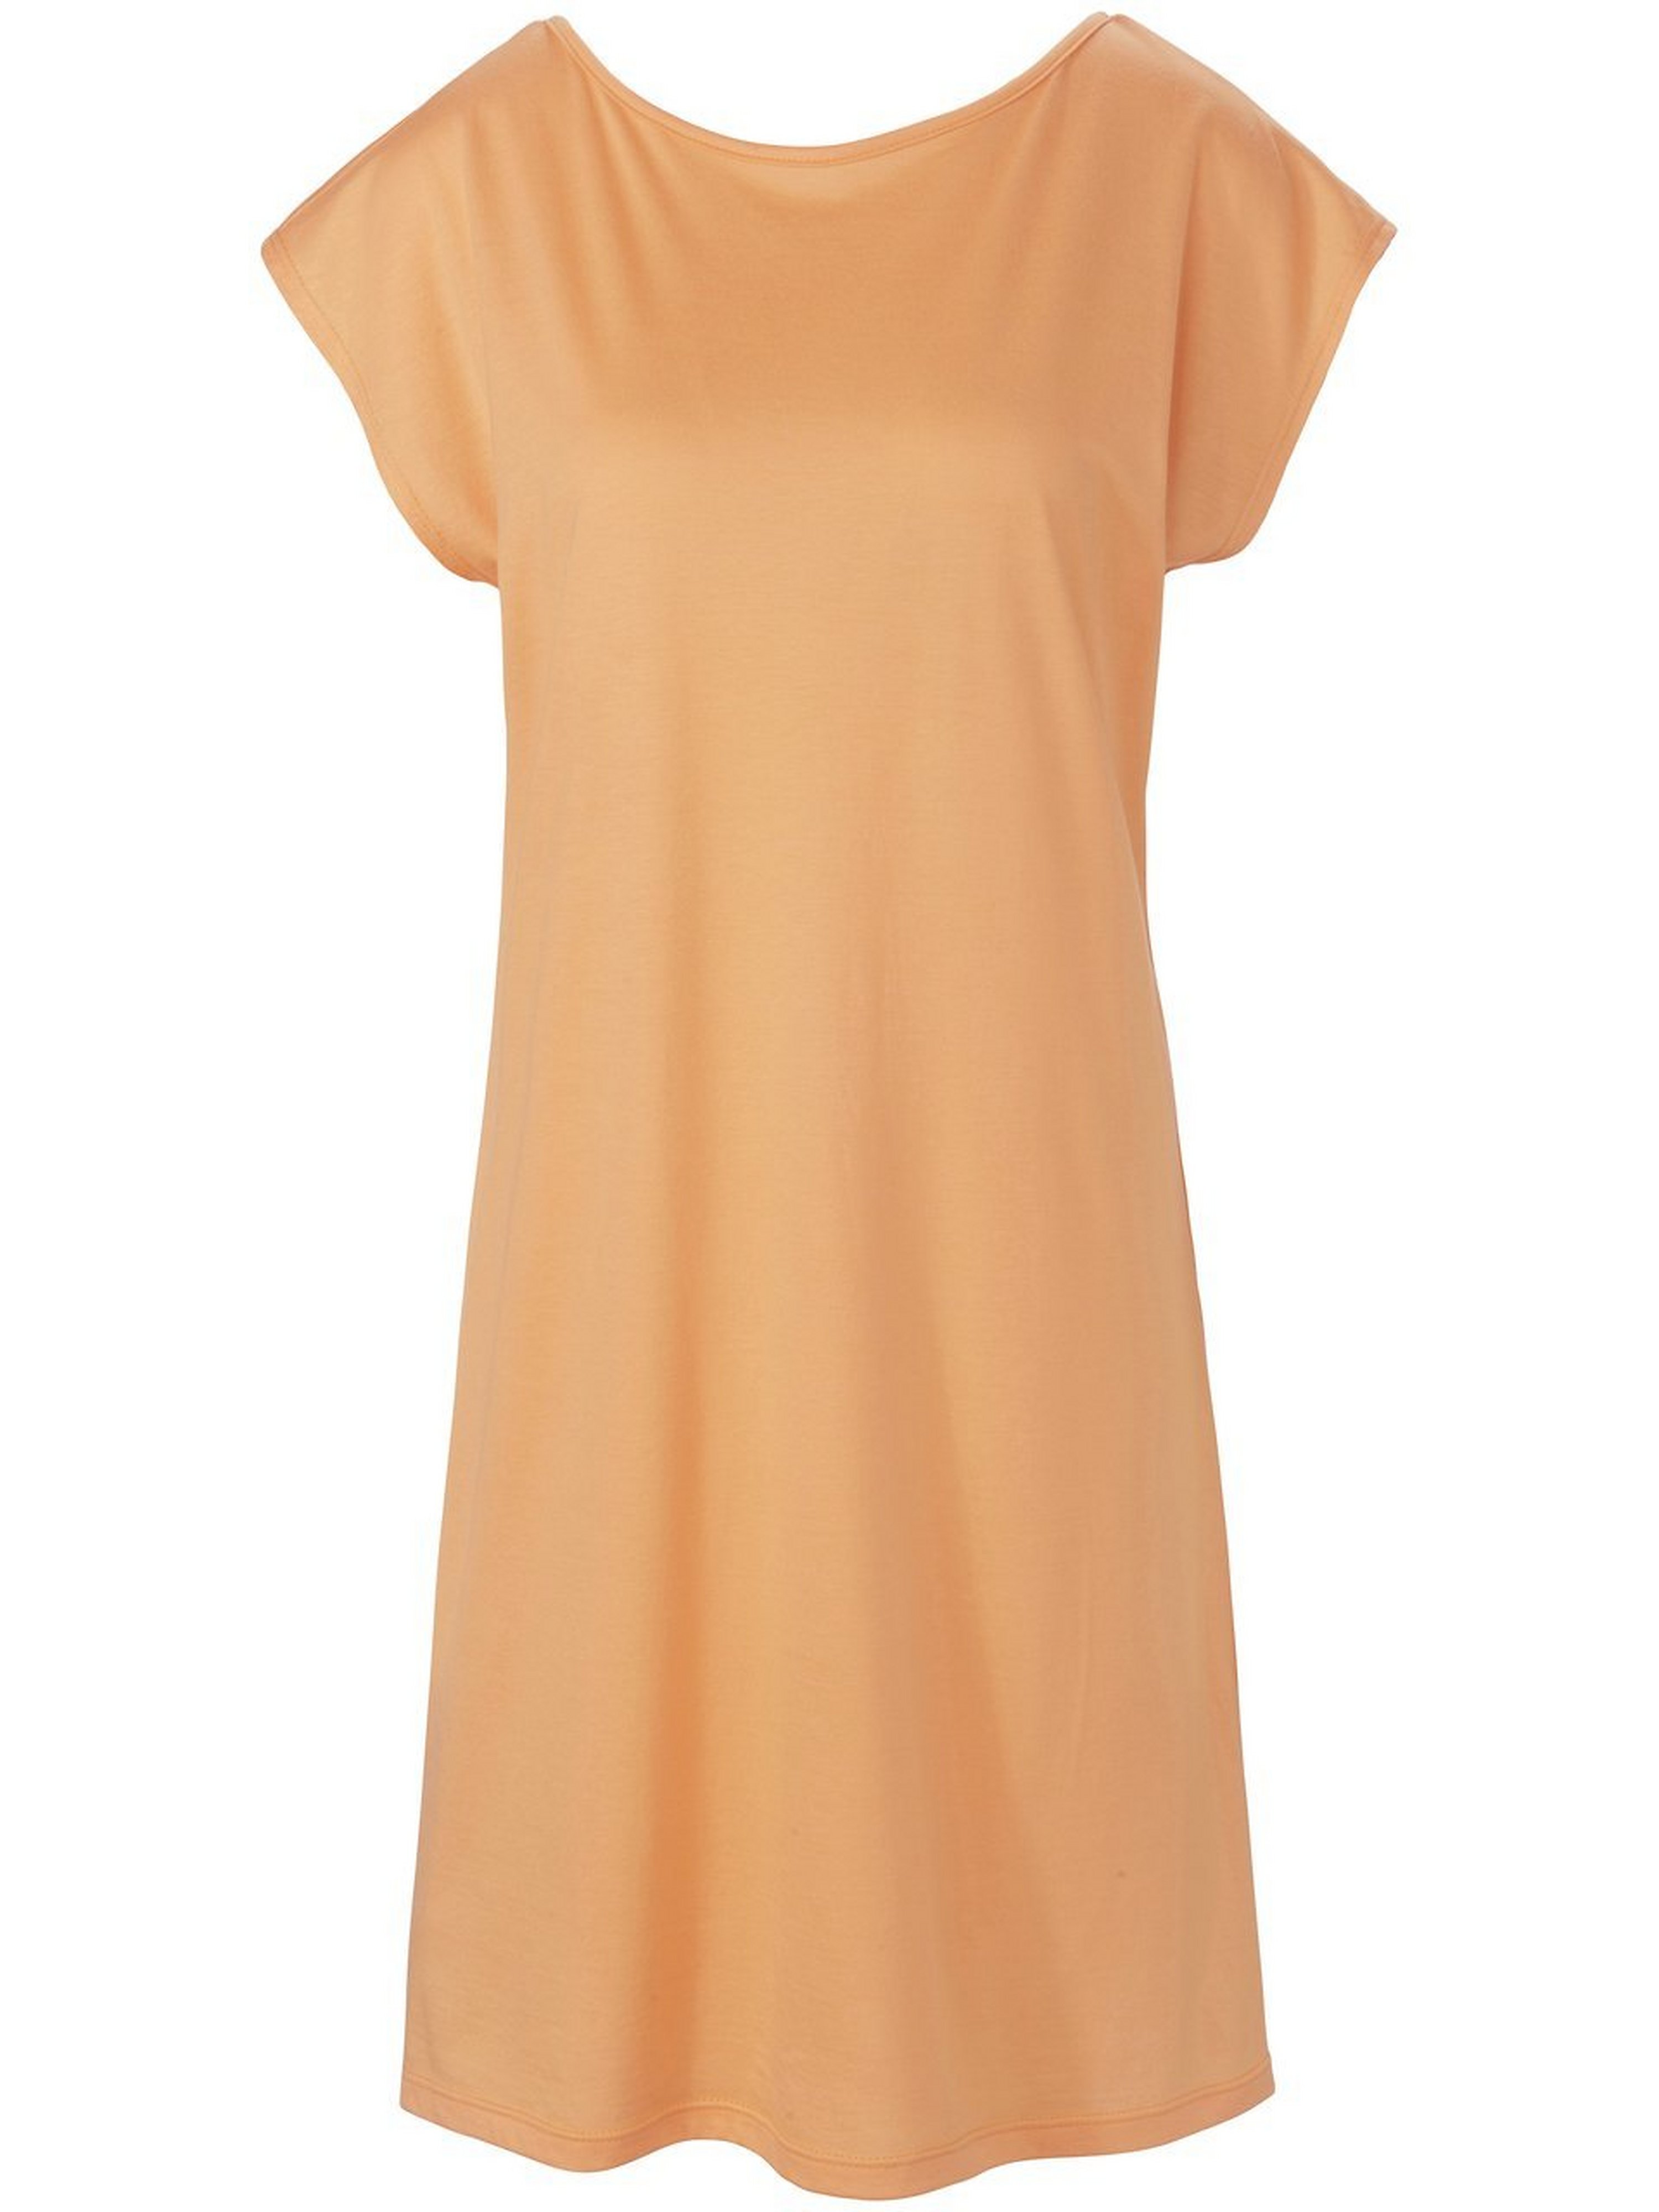 La robe coupe droite  Peter Hahn orange